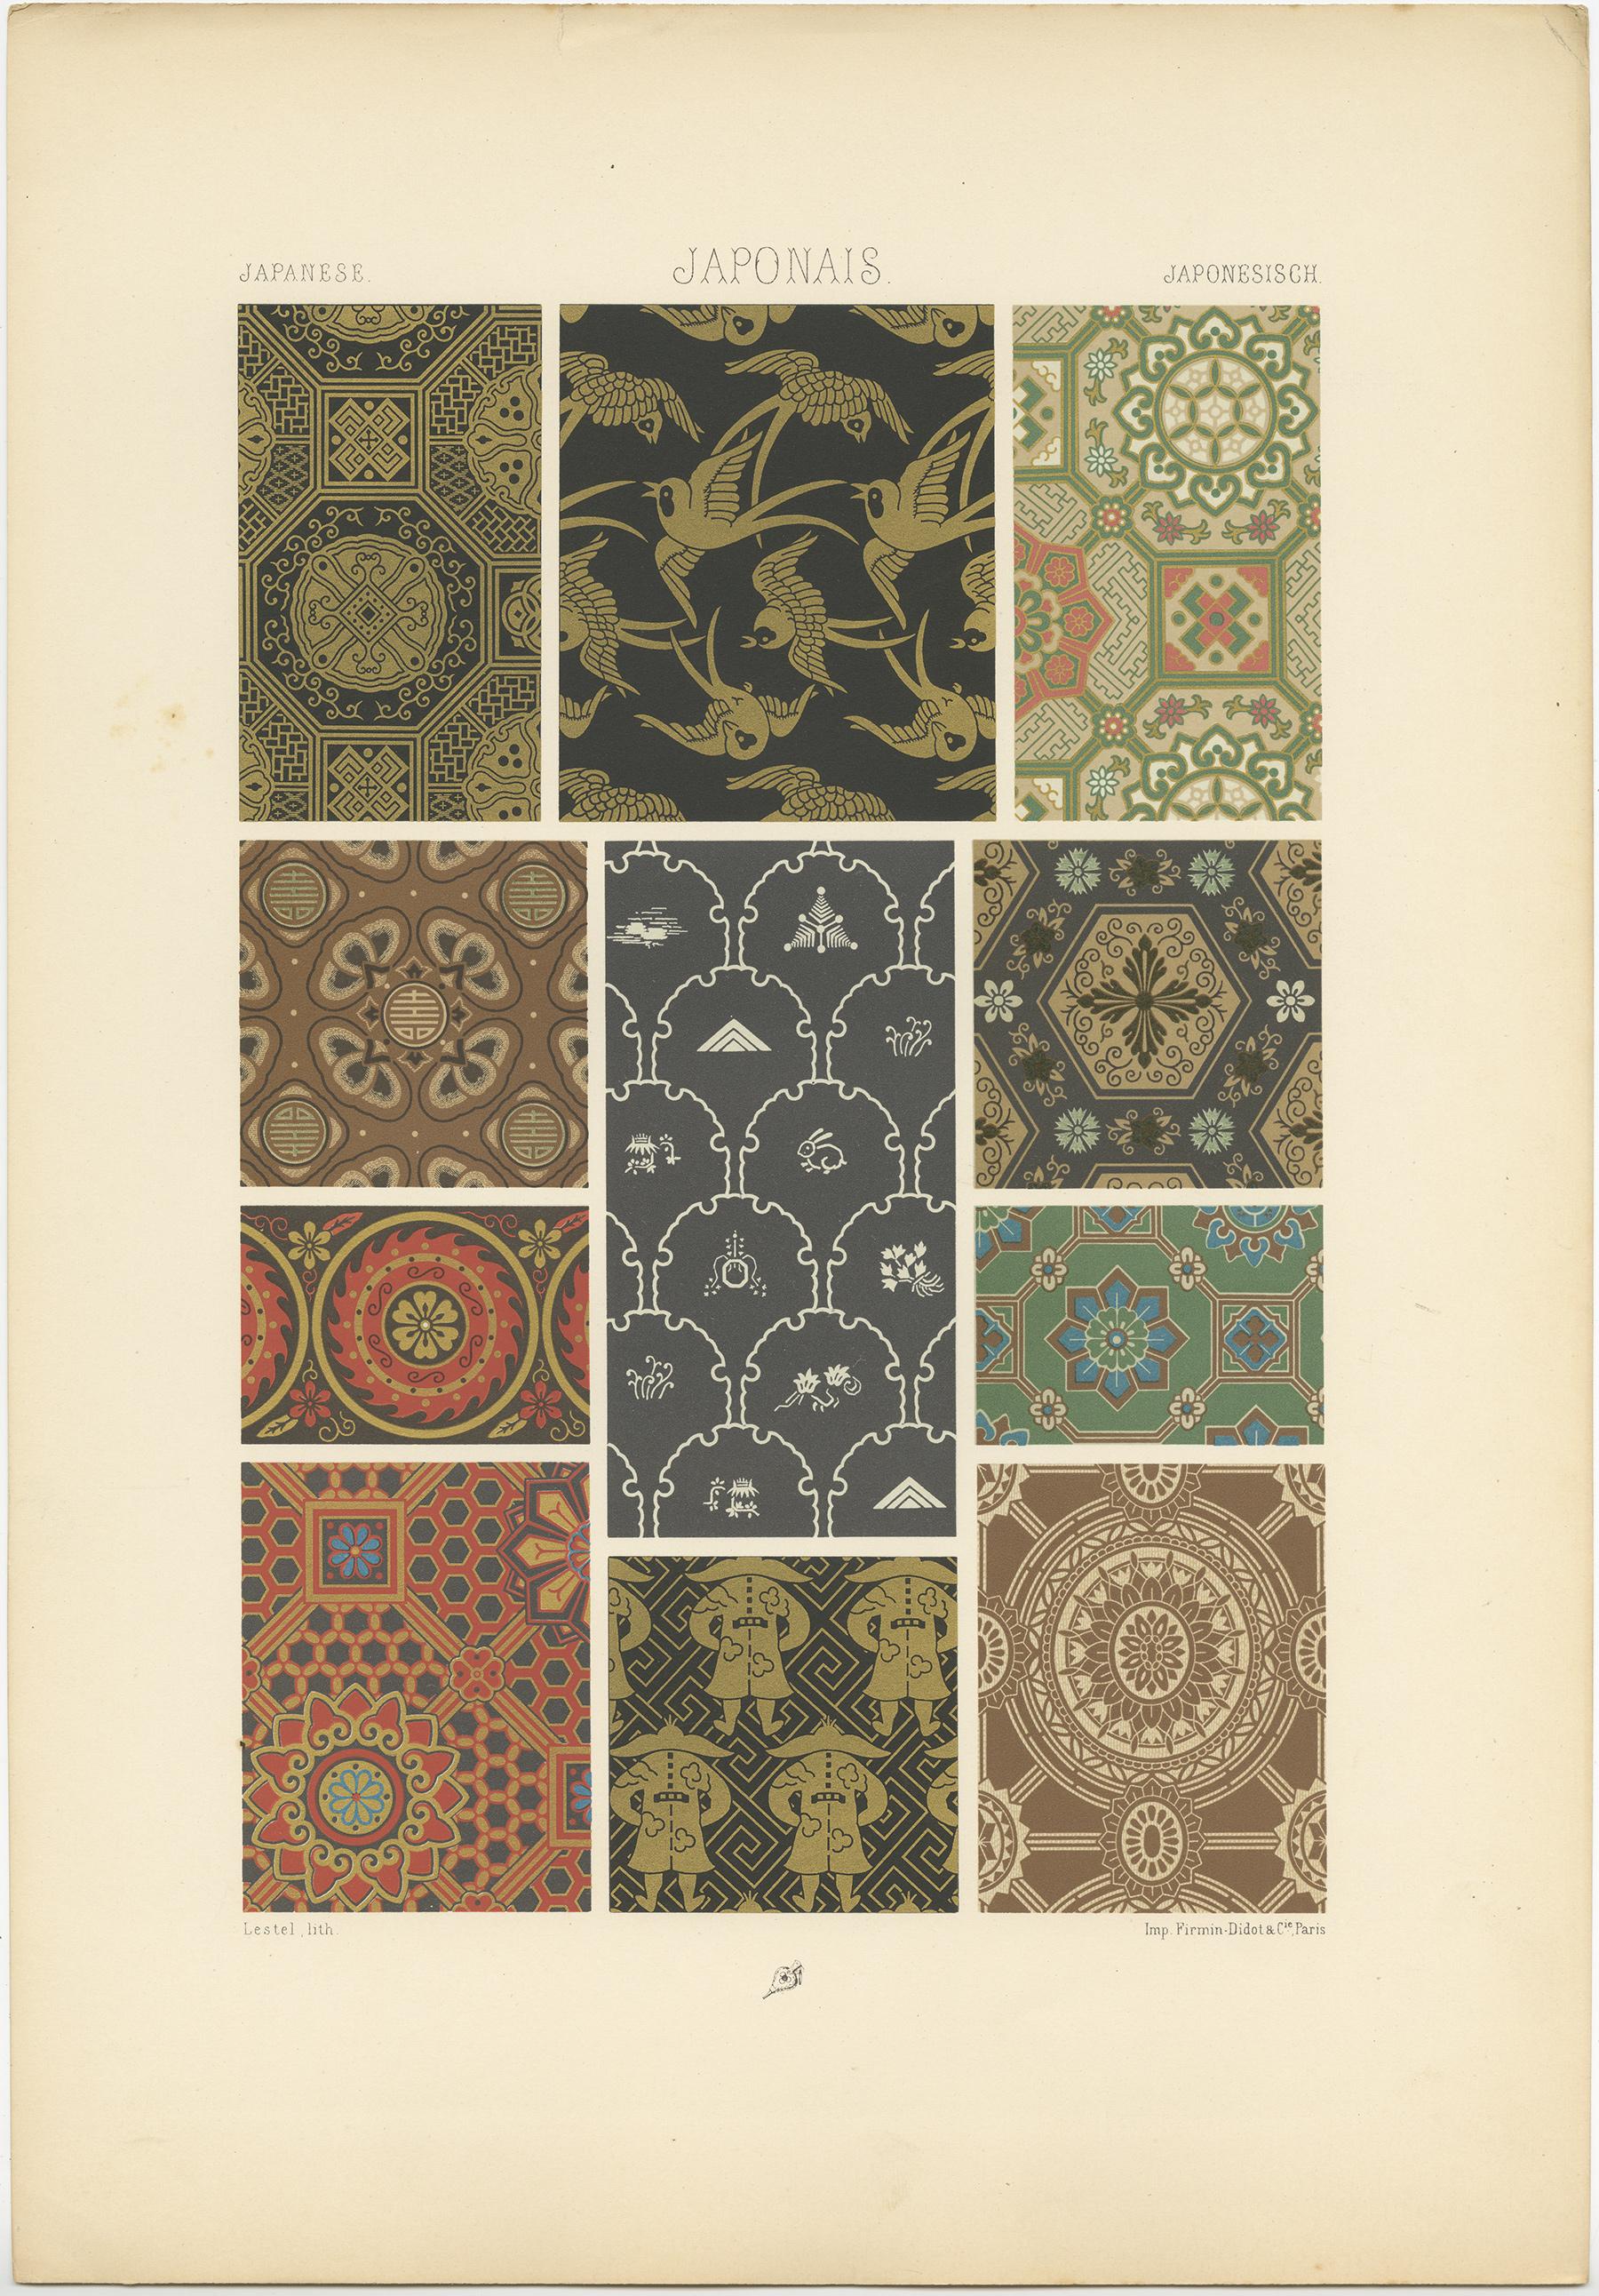 Antique print titled 'Japanese - Japonais - Japonesisch'. Chromolithograph of Japanese Motifs &Textiles ornaments. This print originates from 'l'Ornement Polychrome' by Auguste Racinet. Published circa 1890.